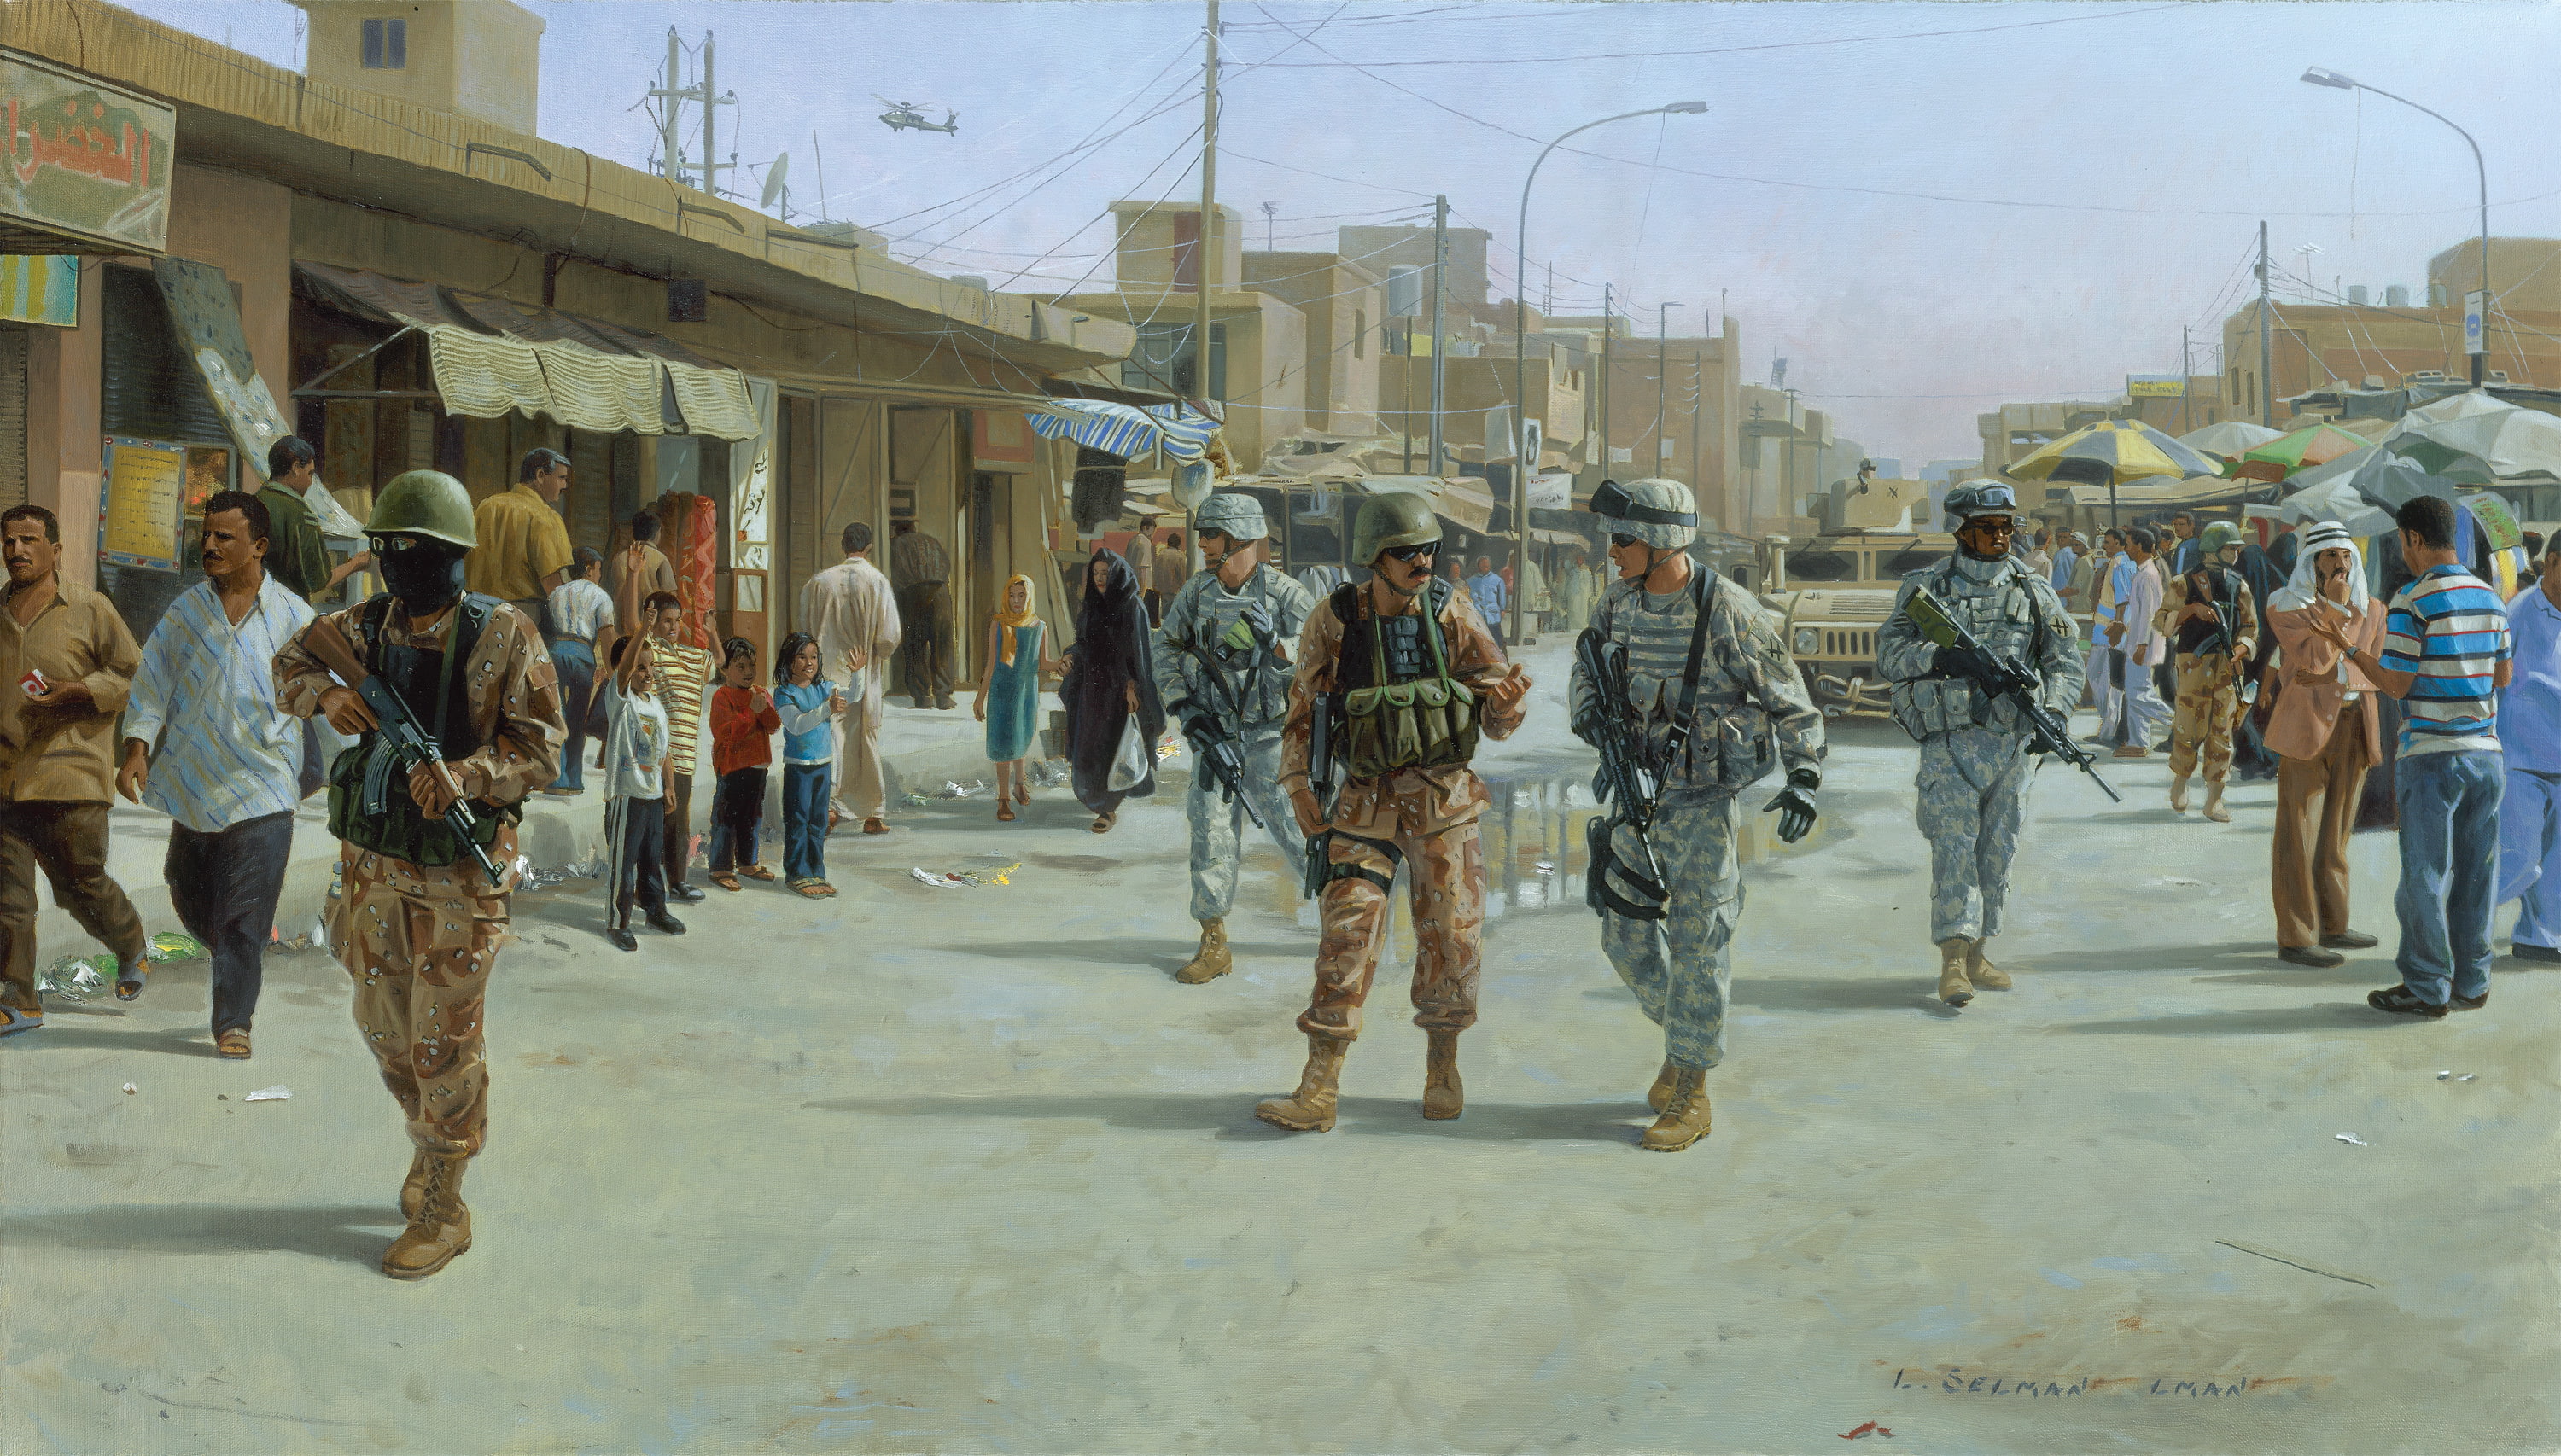 the city, war, 2005, Iraq, Mahmudiya, September 27